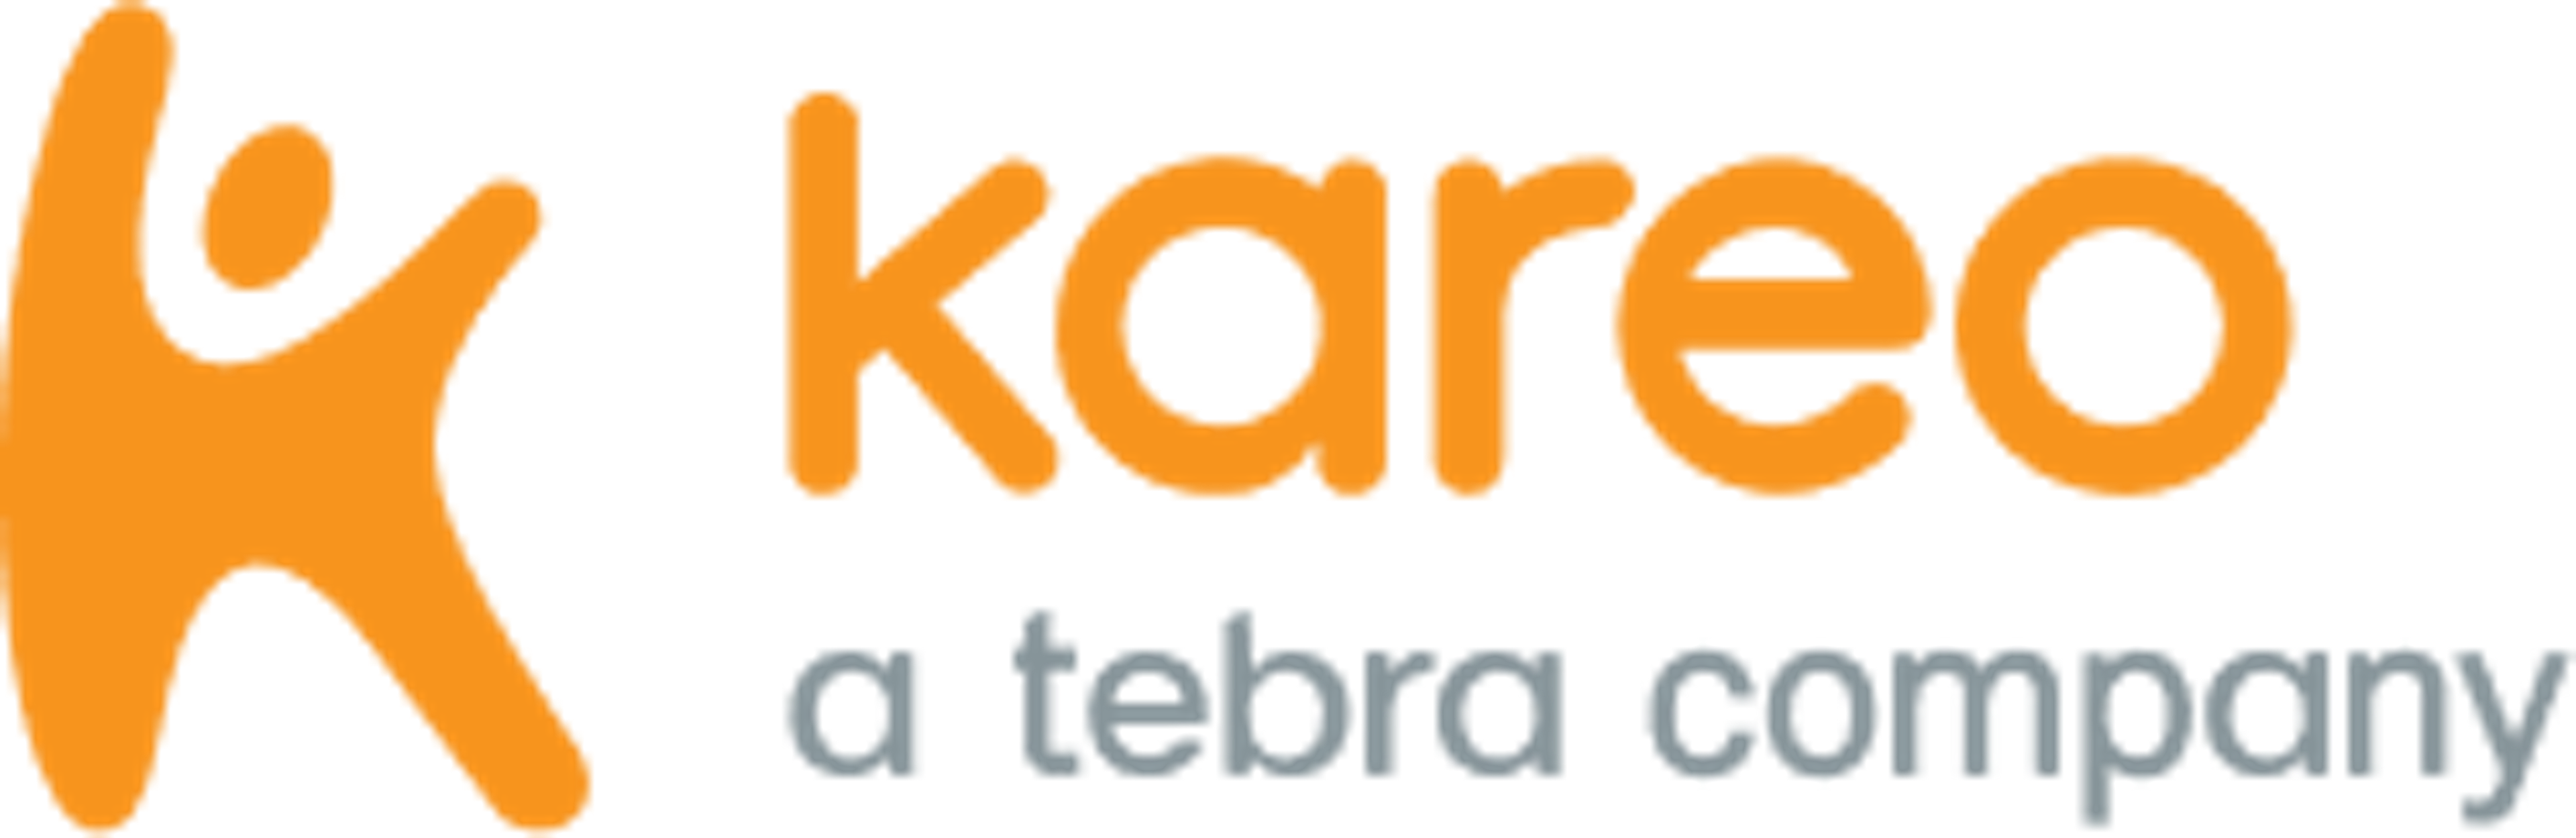 Kareo Clinical Logo